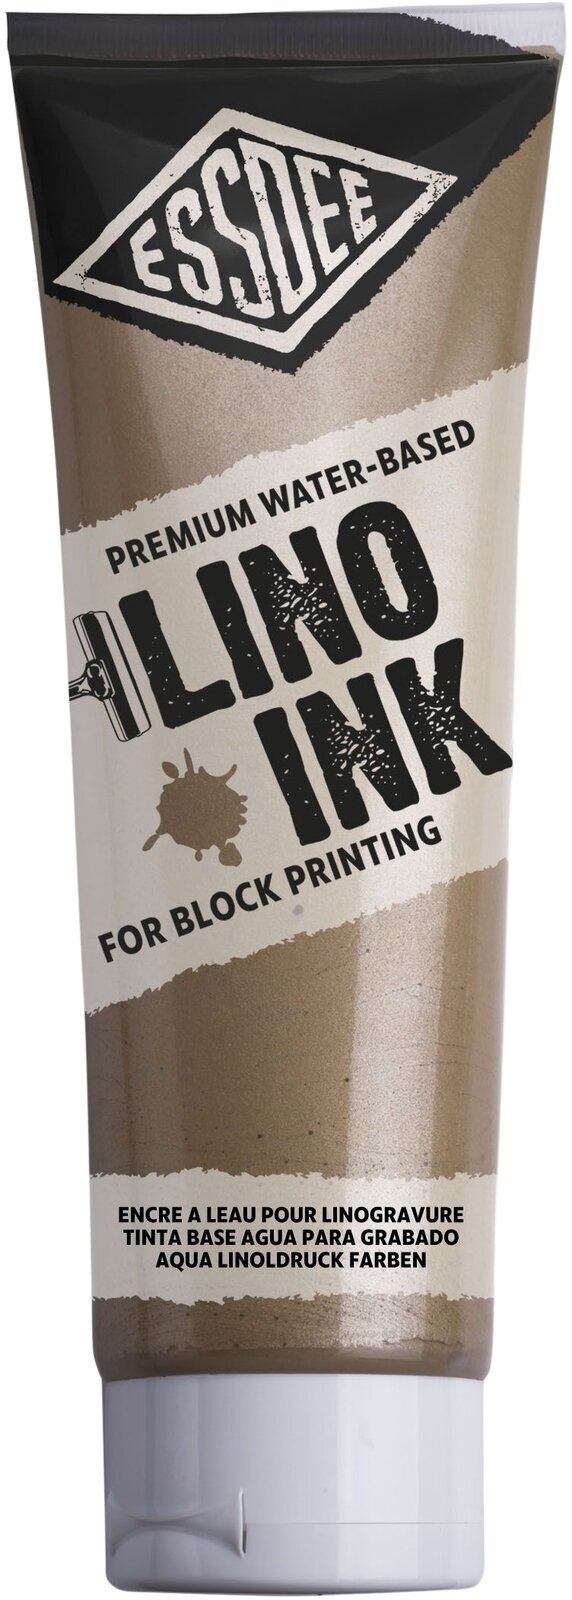 Verf voor linosnede Essdee Block Printing Ink Verf voor linosnede Metallic Gold 300 ml